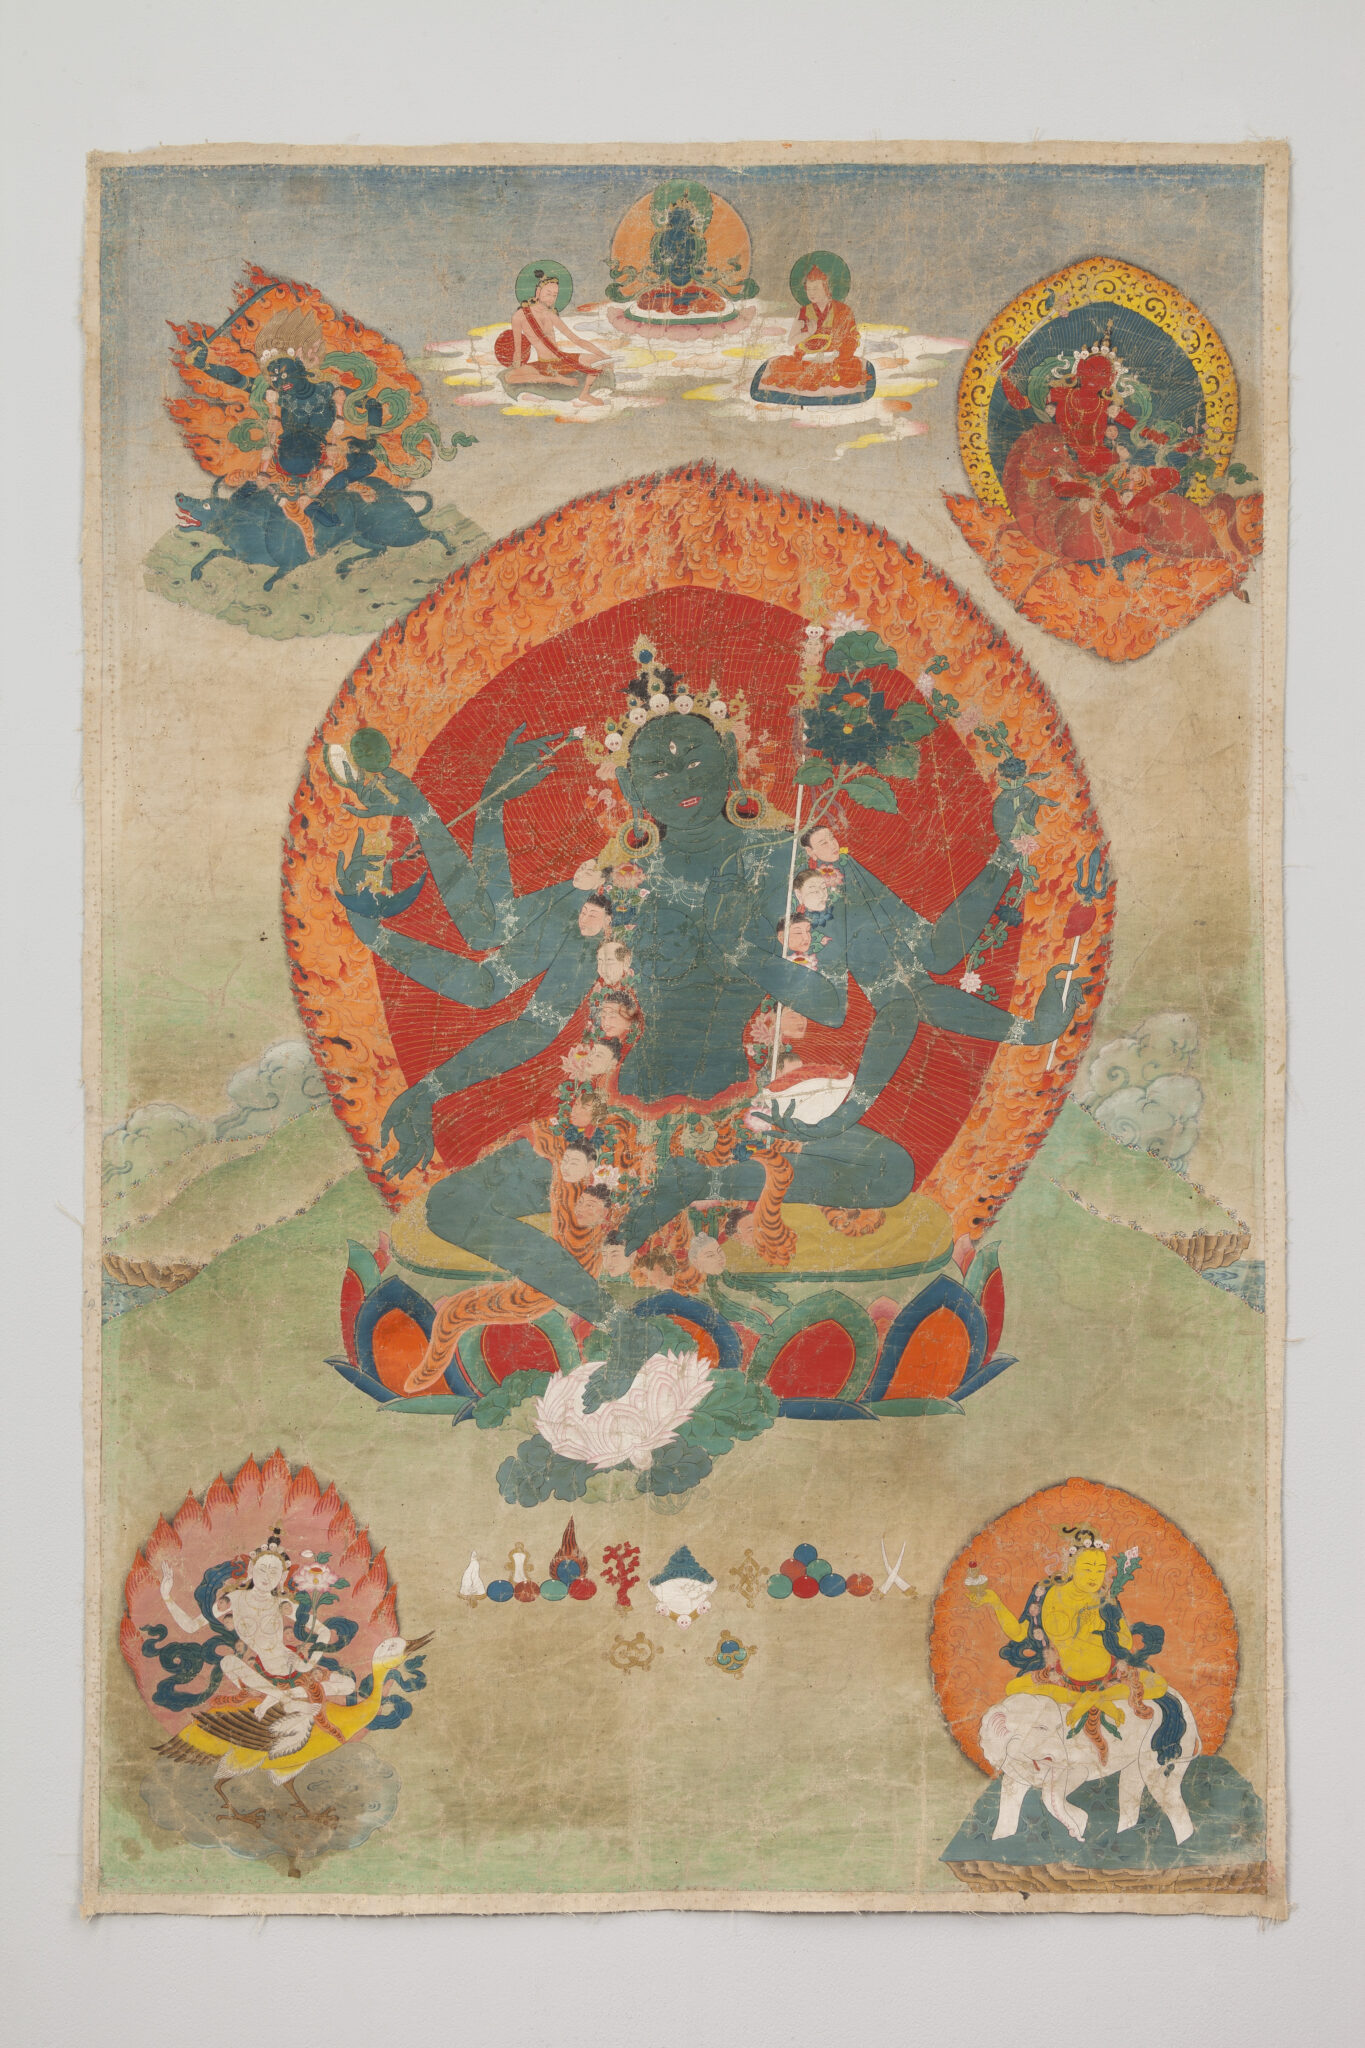 Green-skinned, many-armed Bodhisattva wearing garland of human heads seated before fiery nimbus